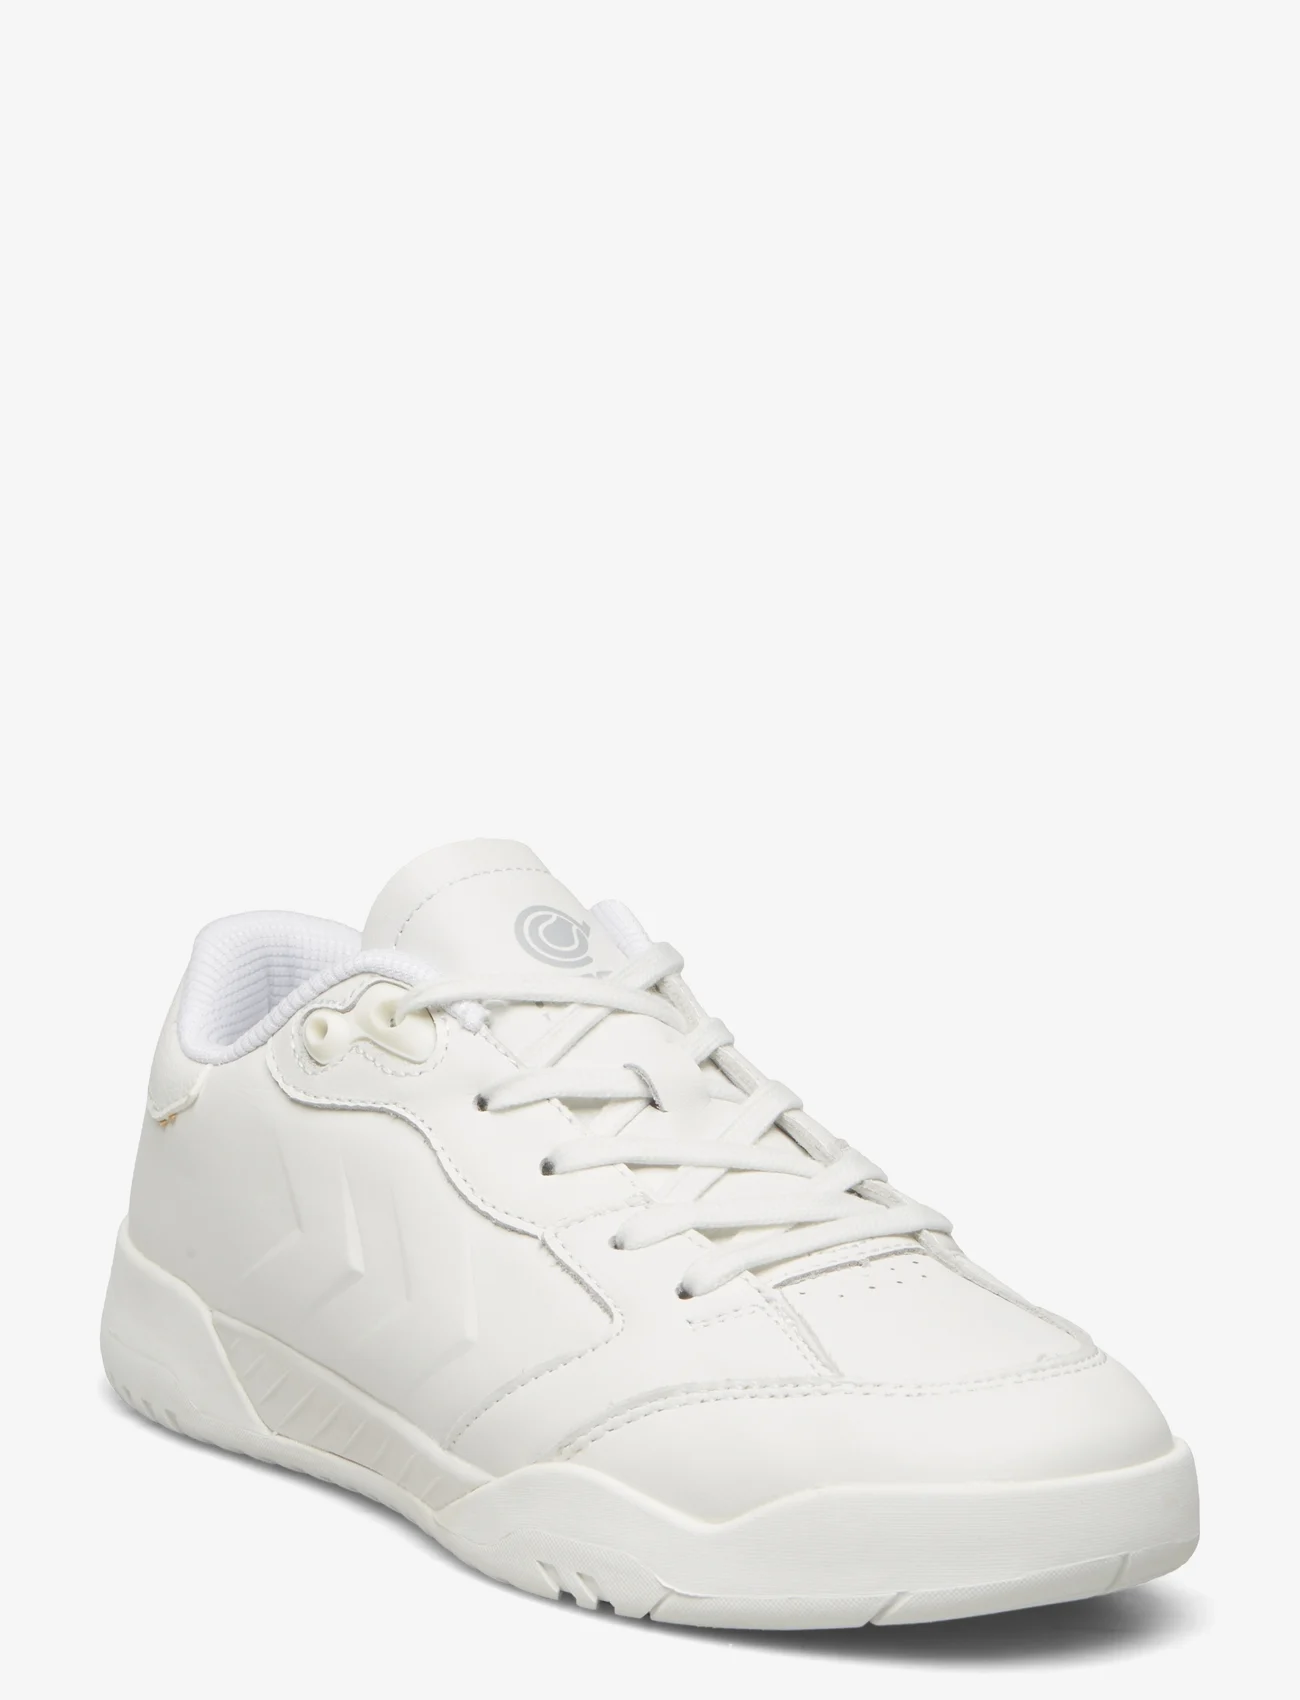 Hummel - TOP SPIN REACH LX-E - niedrige sneakers - white - 0